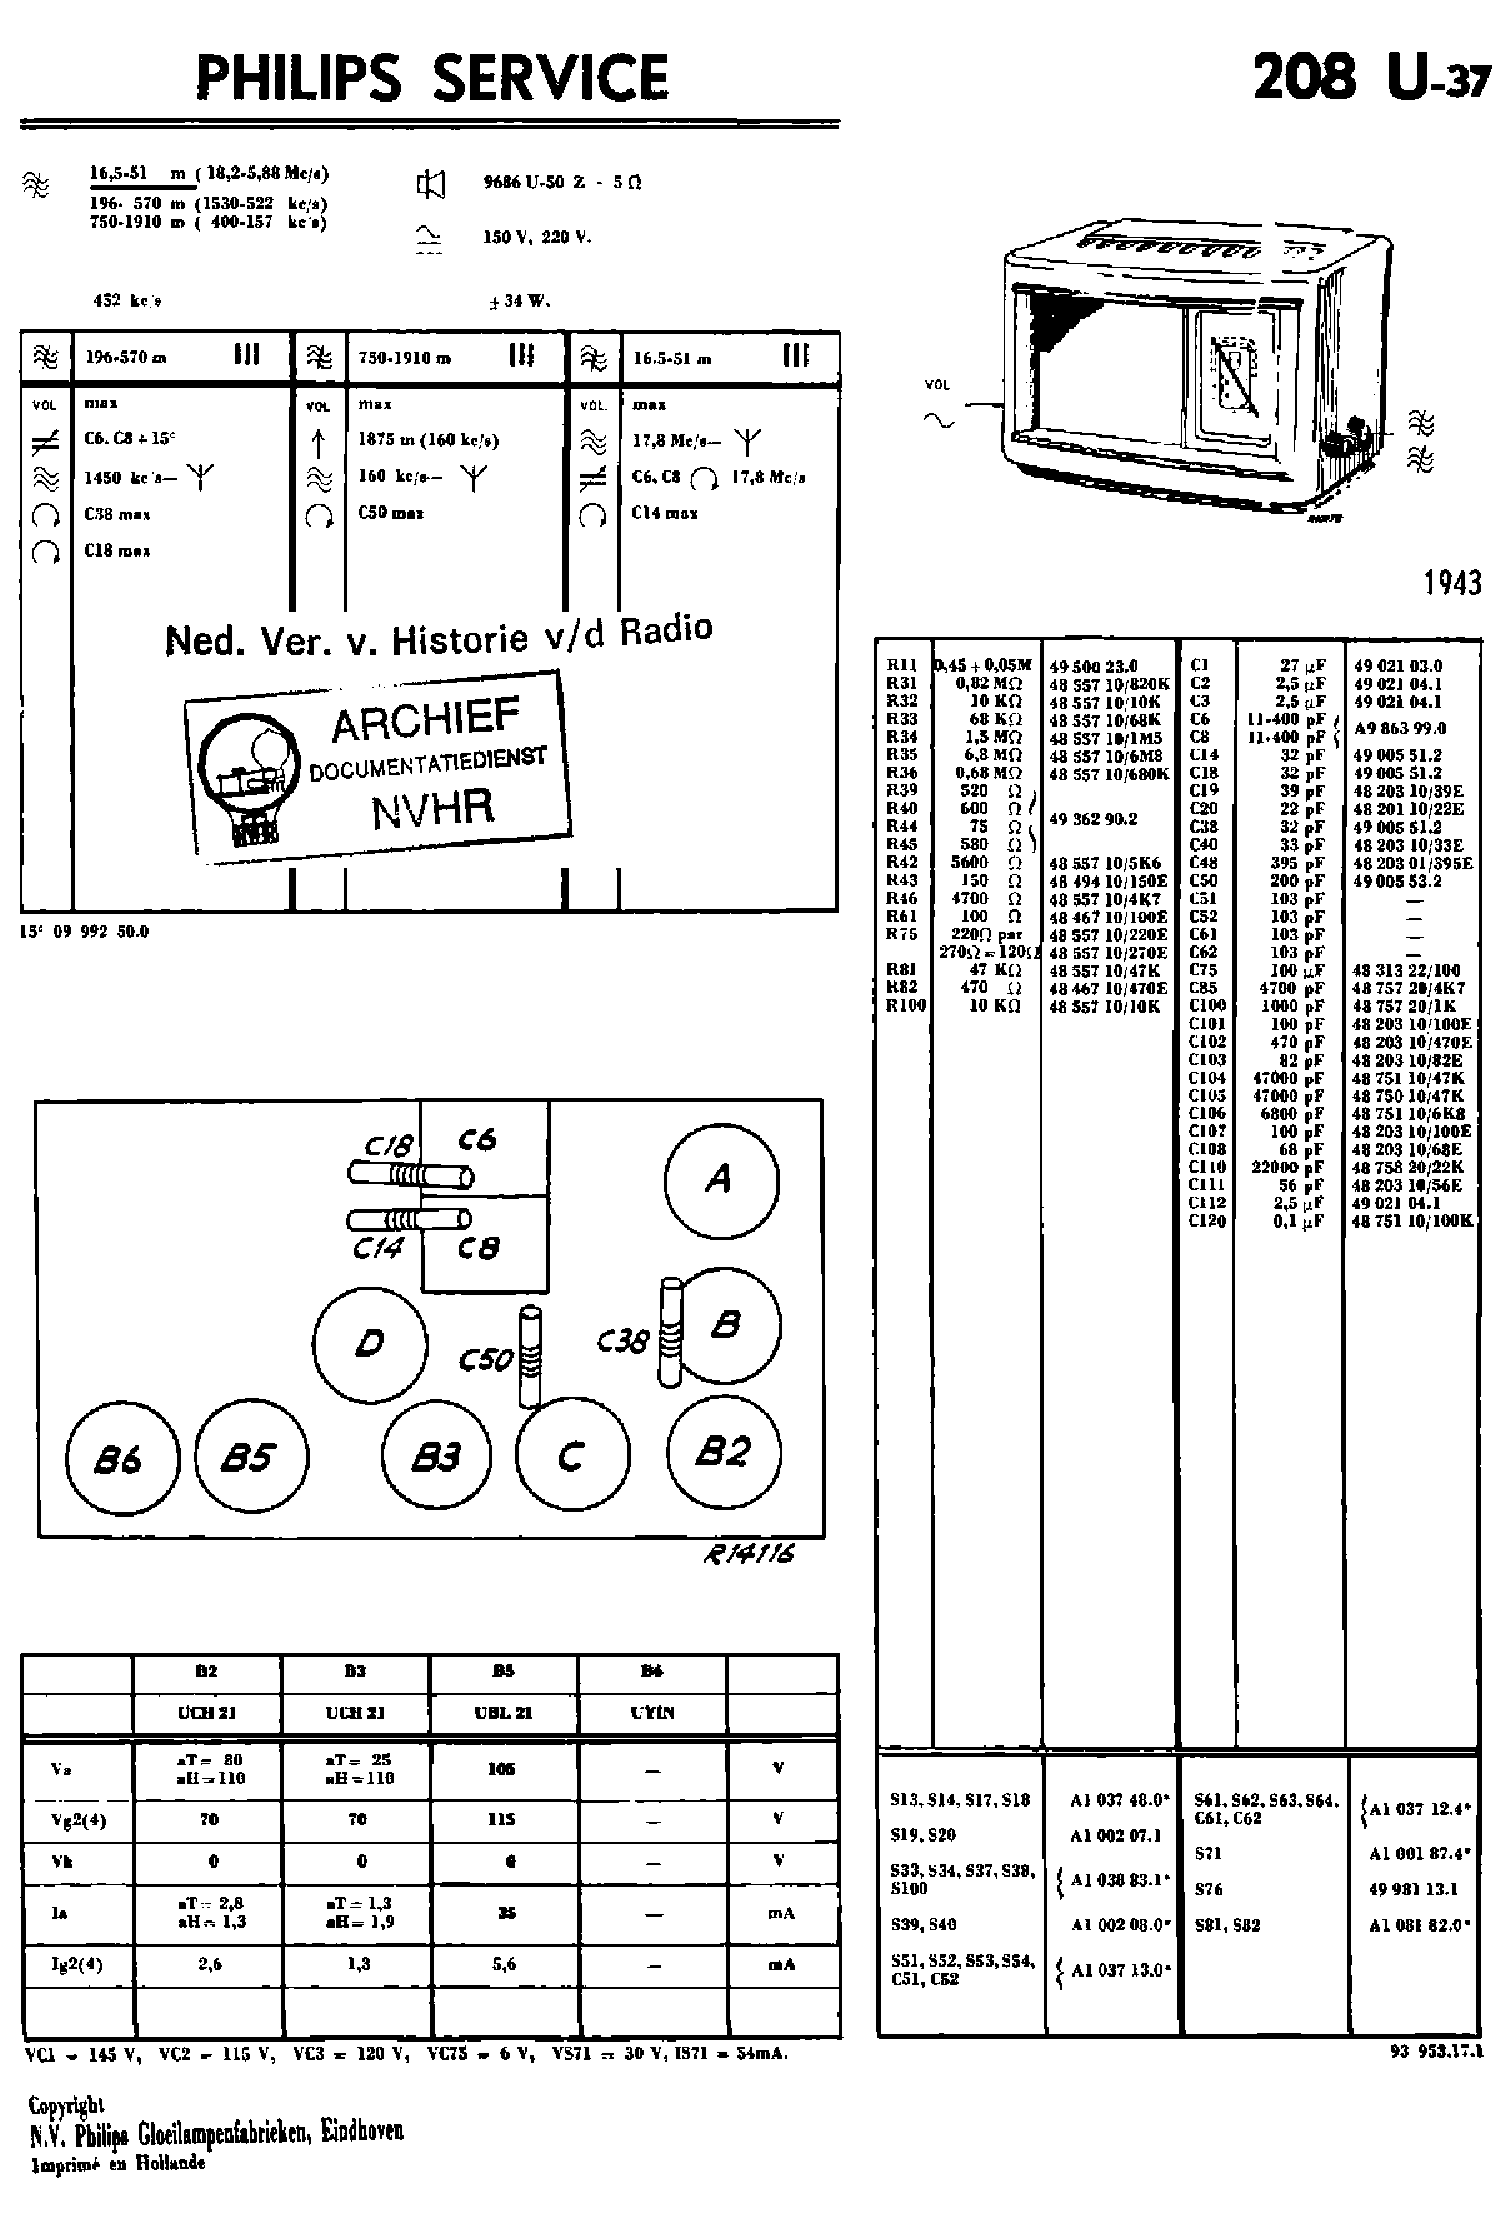 PHILIPS 208U-37 AC-DC RECEIVER 1943 SM service manual (1st page)